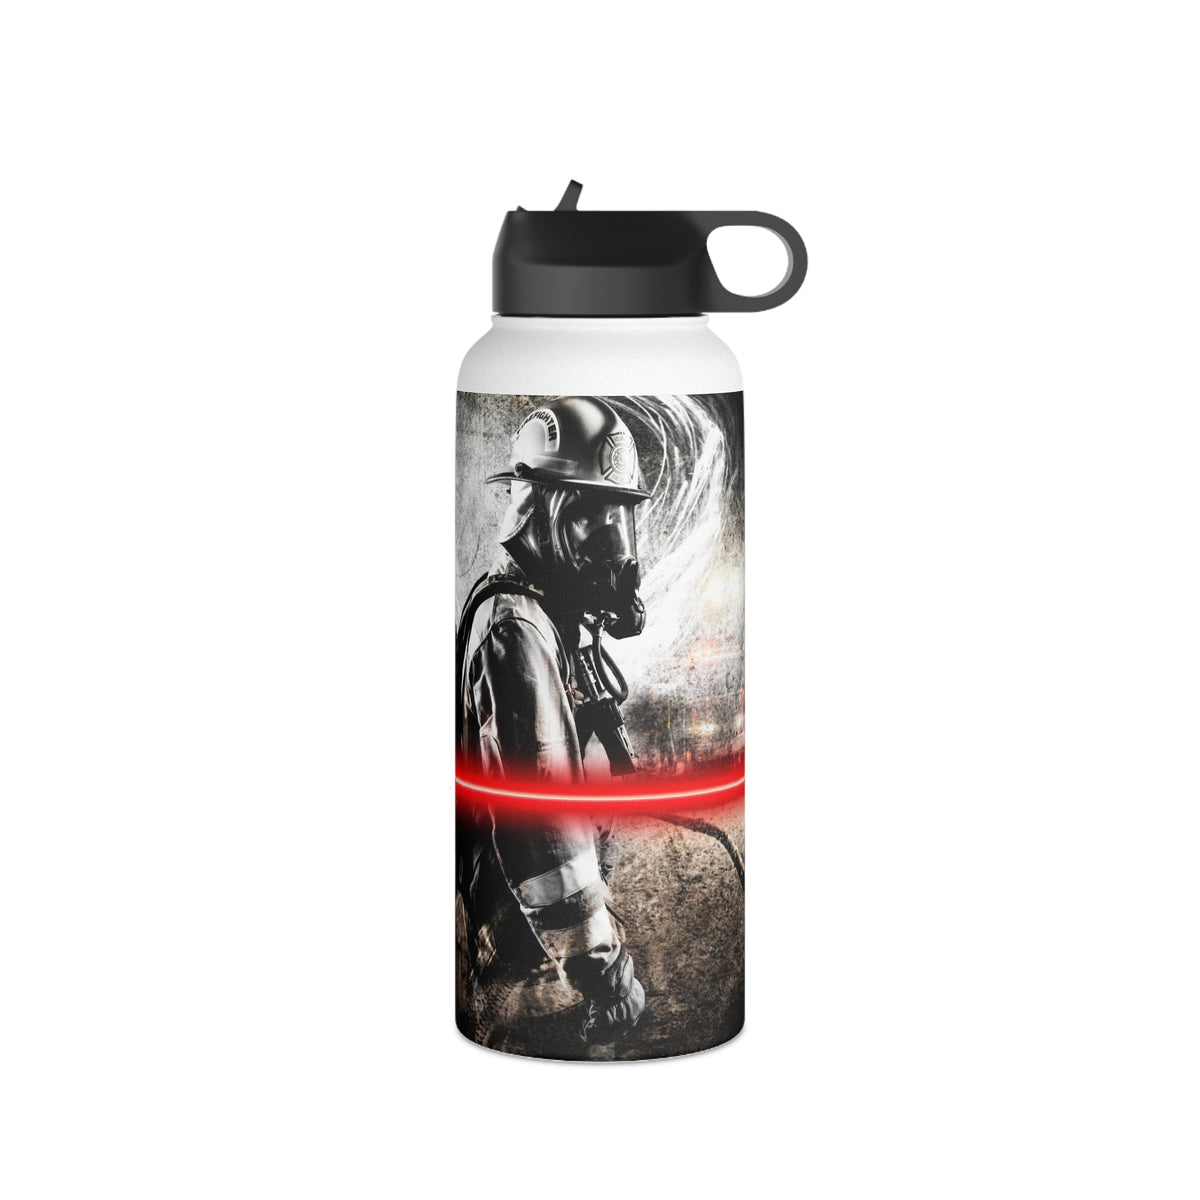 Send Me Firefighter Stainless Steel Water Bottle